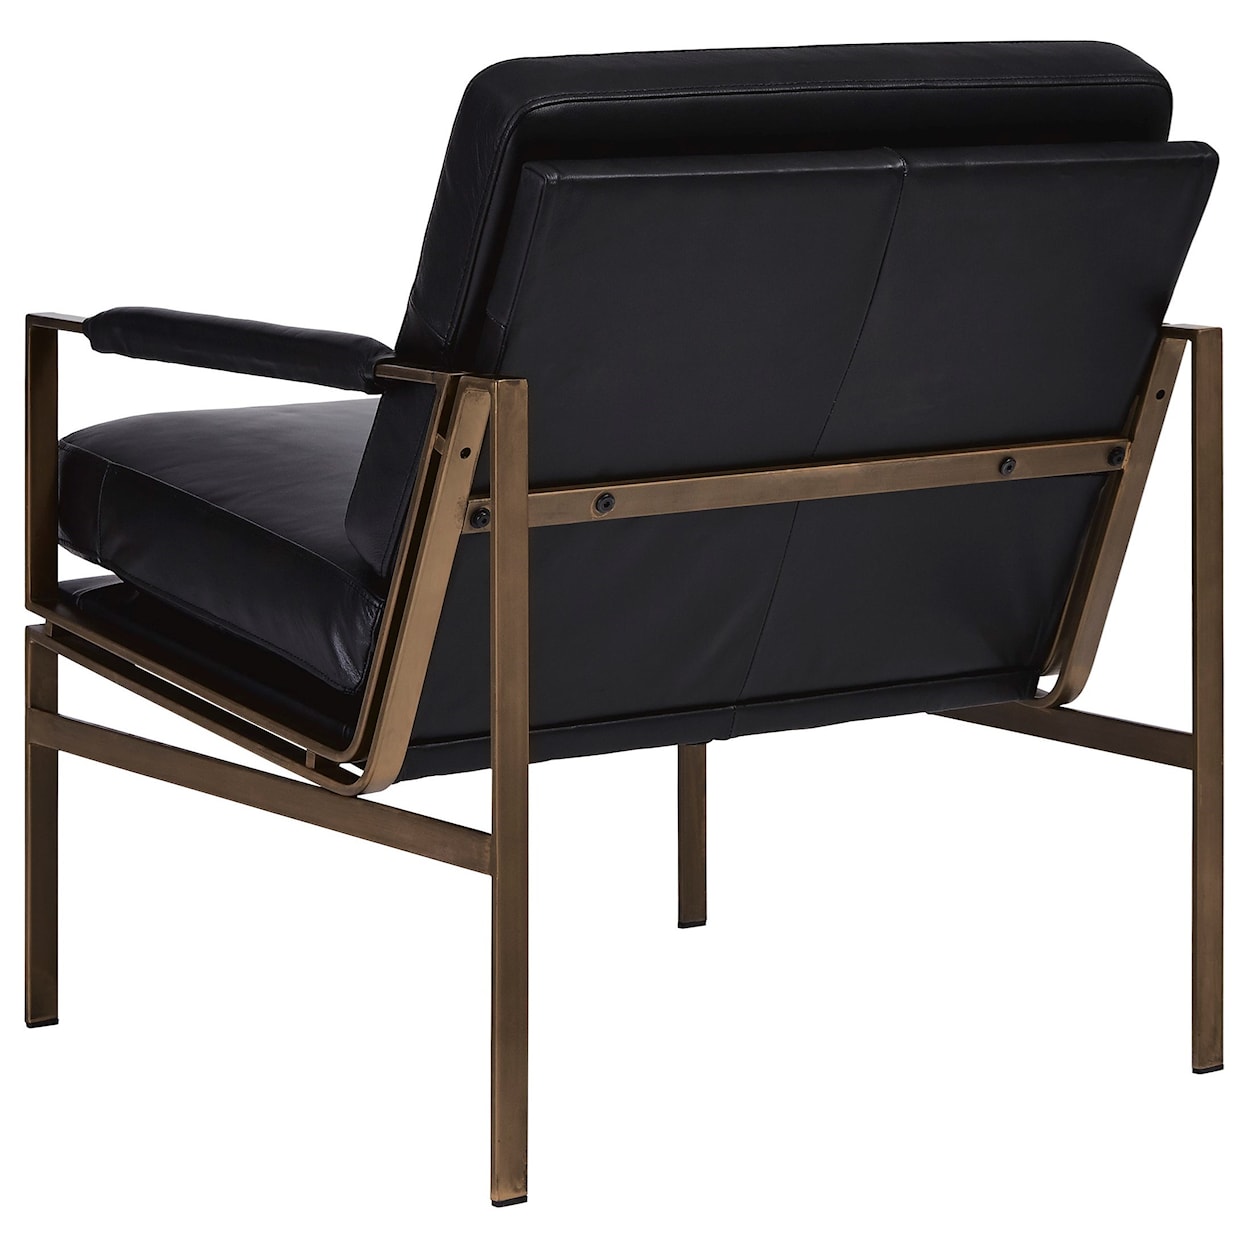 Ashley Furniture Signature Design Puckman Accent Chair